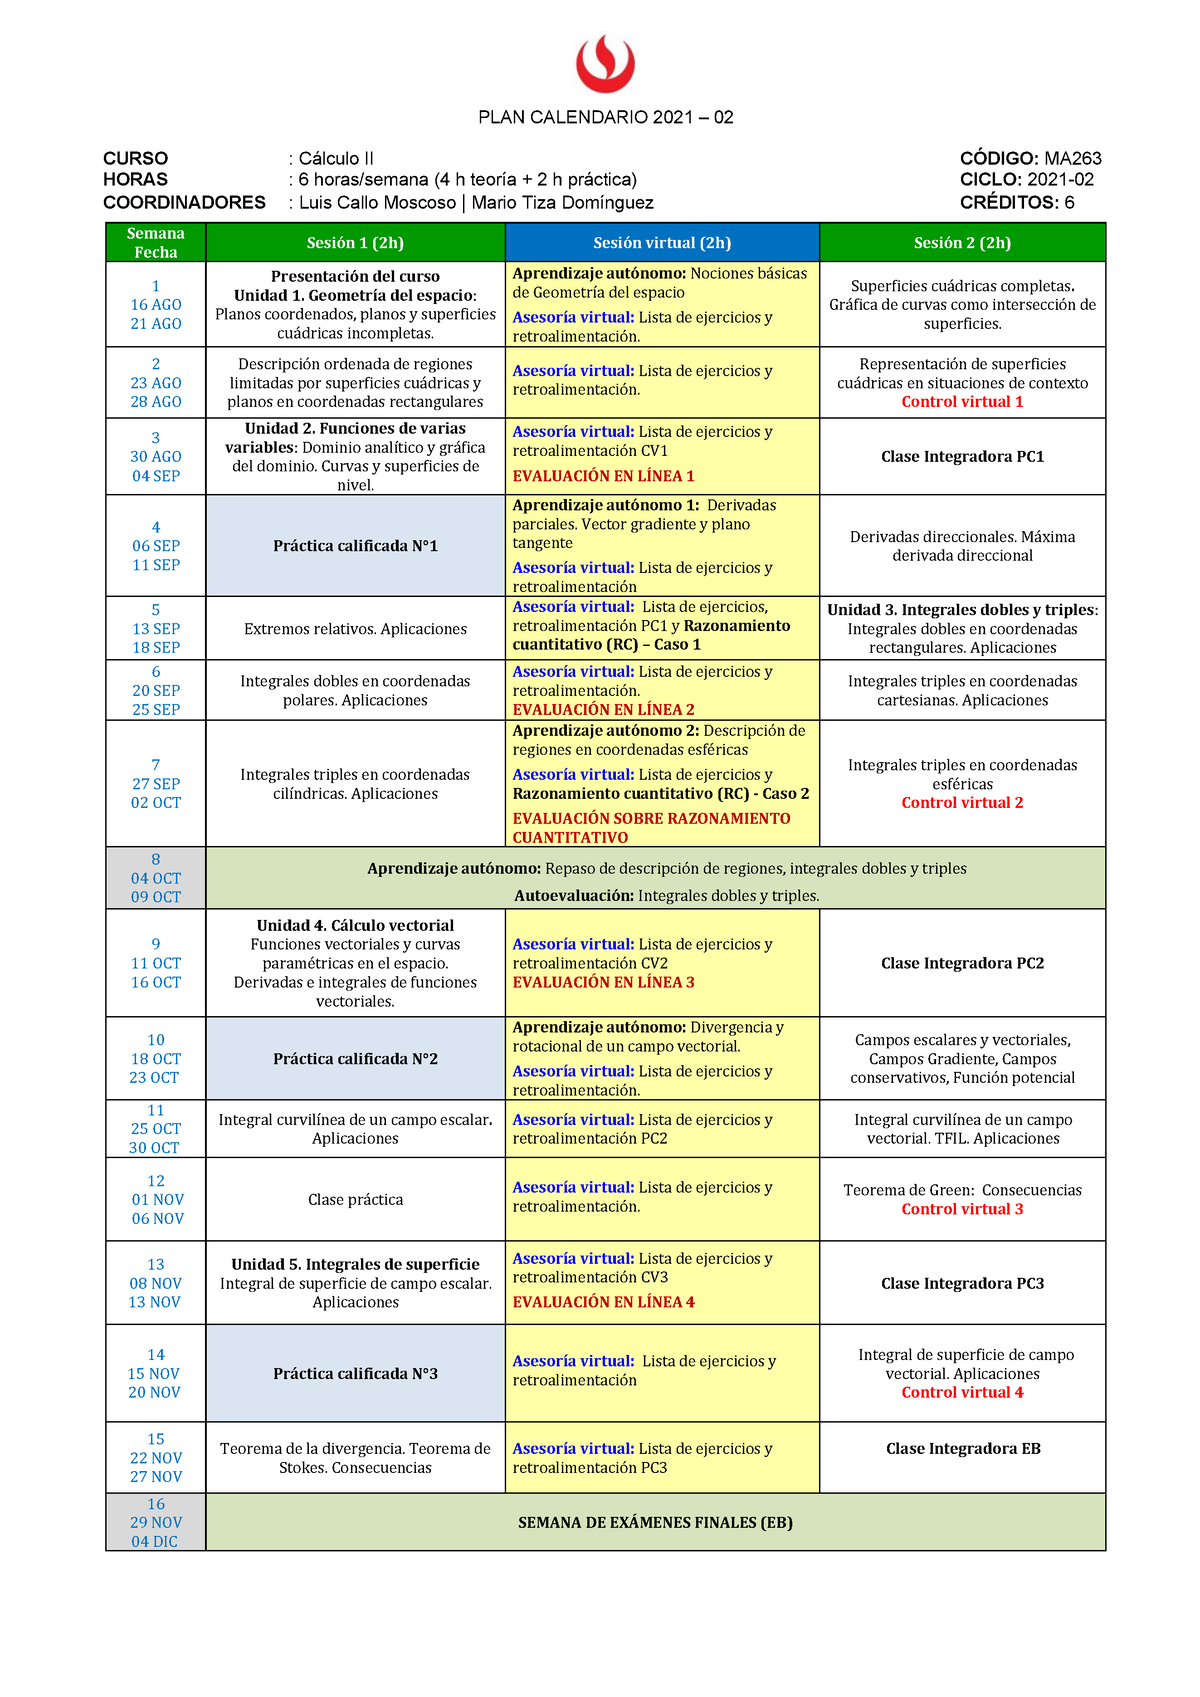 MA263 2021-02 Plan Calendario - Cálculo - UPC - StuDocu